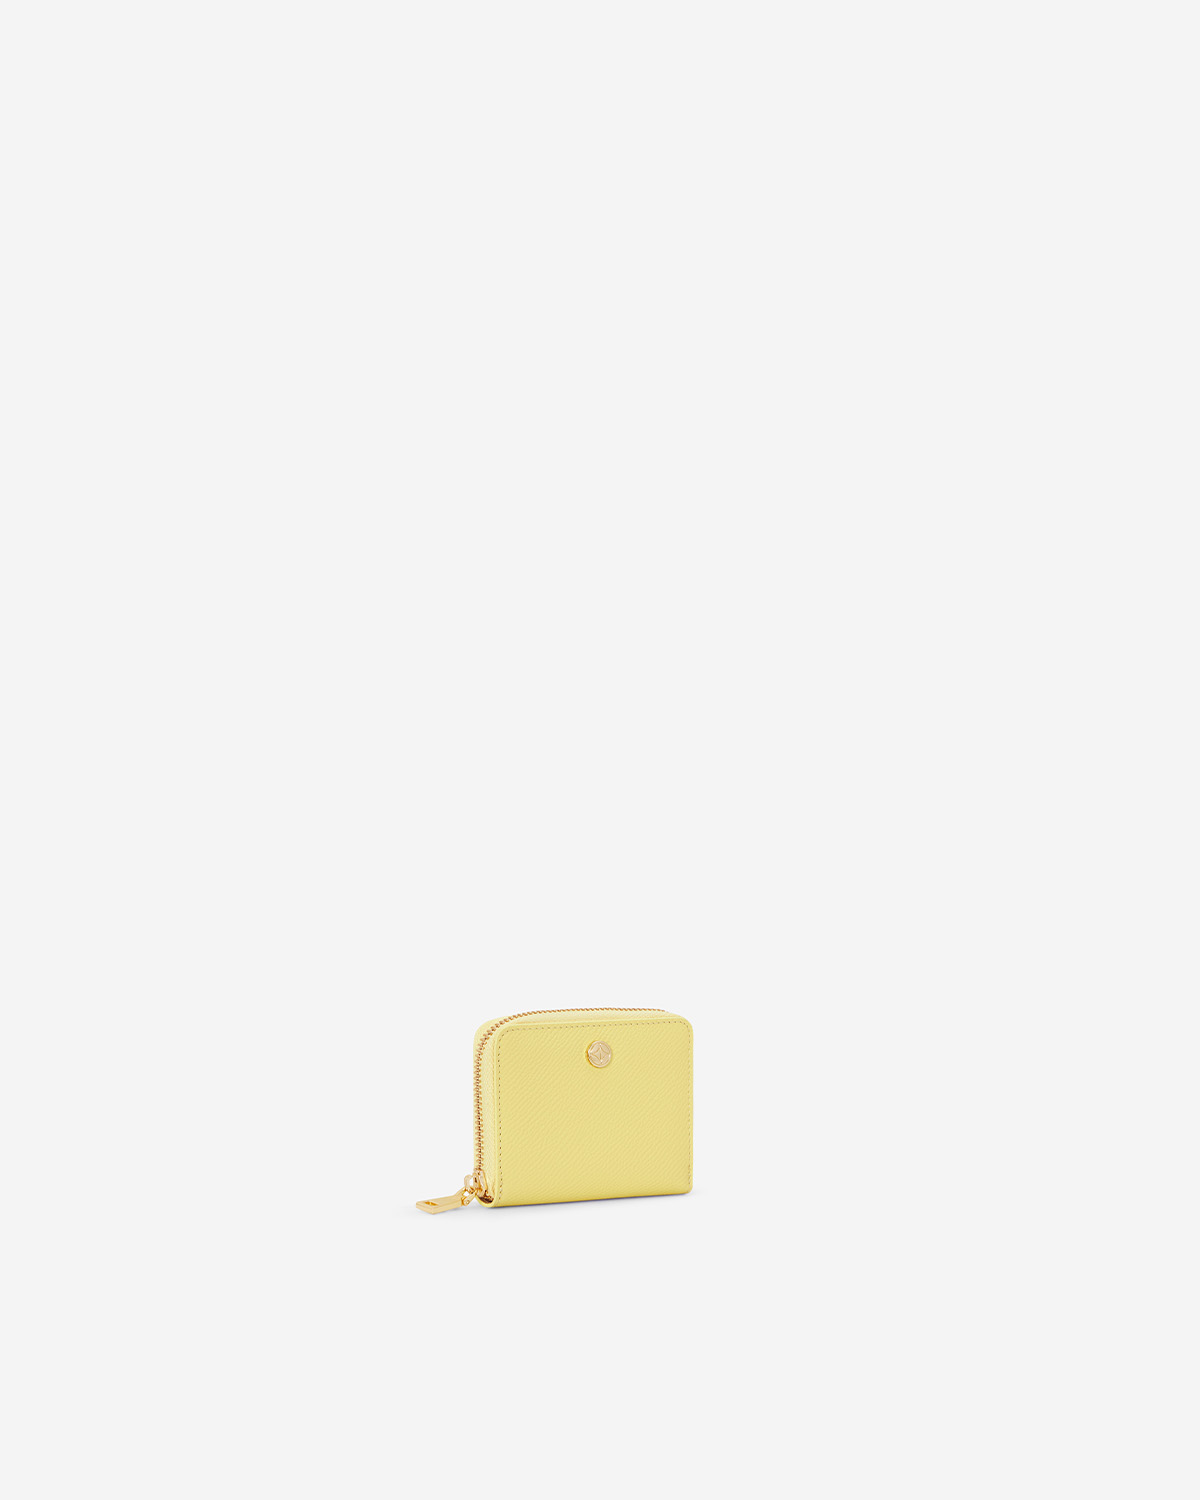 VERA Emily Zipped Wallet in Happy Yellow กระเป๋าใส่บัตรหนังแท้ ทรงยาว พร้อมช่องซิบ สีส้ม